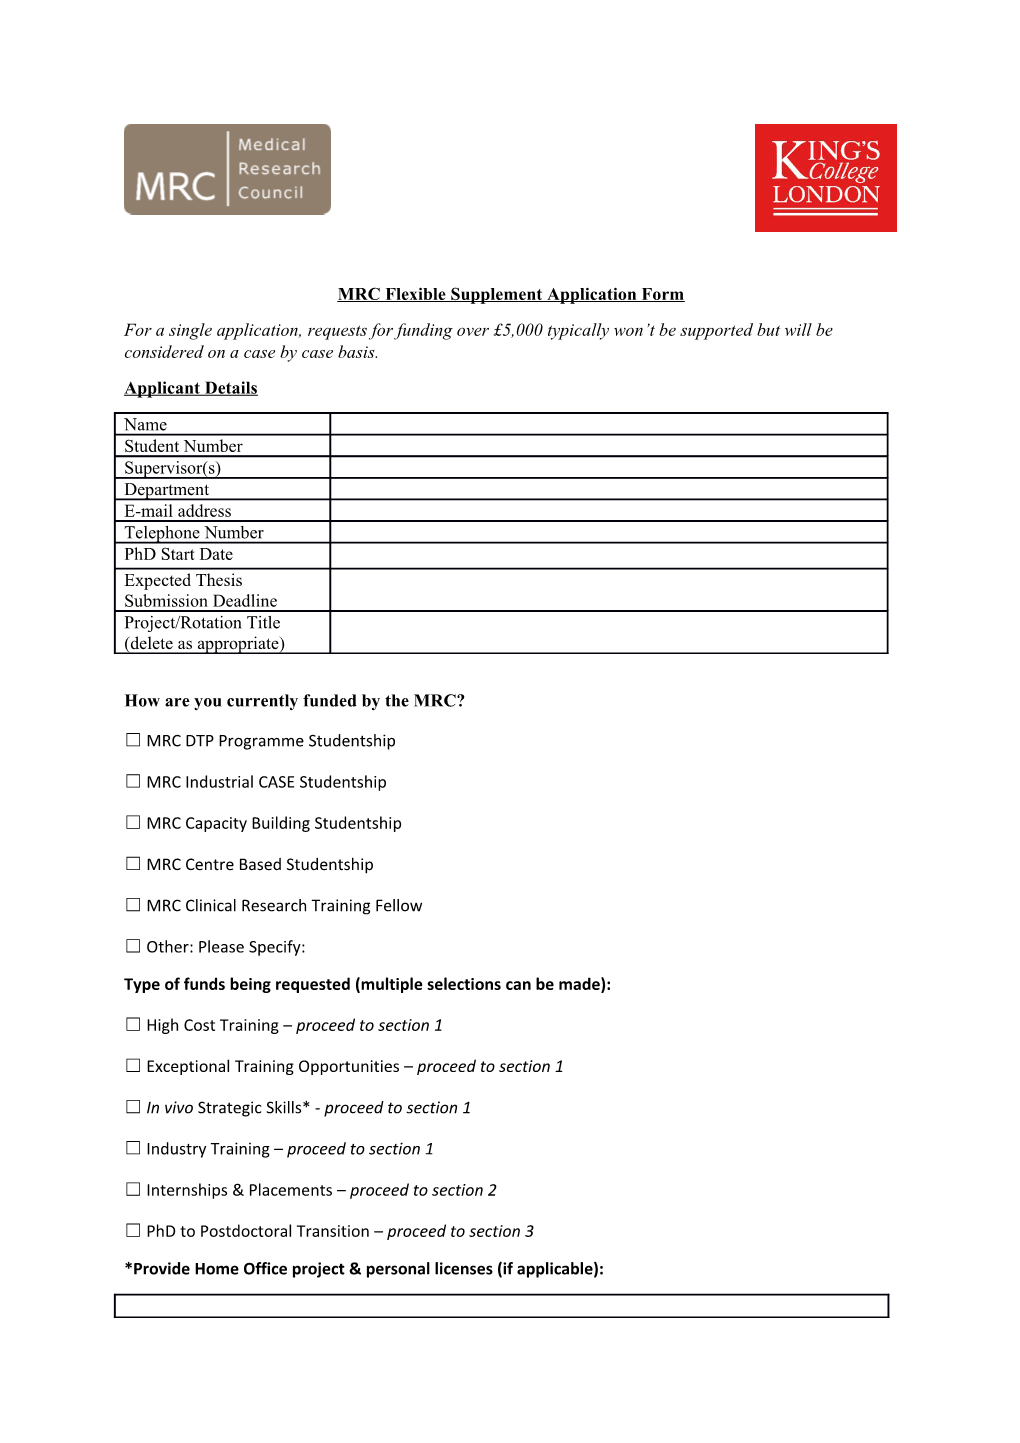 MRC Flexible Supplement Application Form